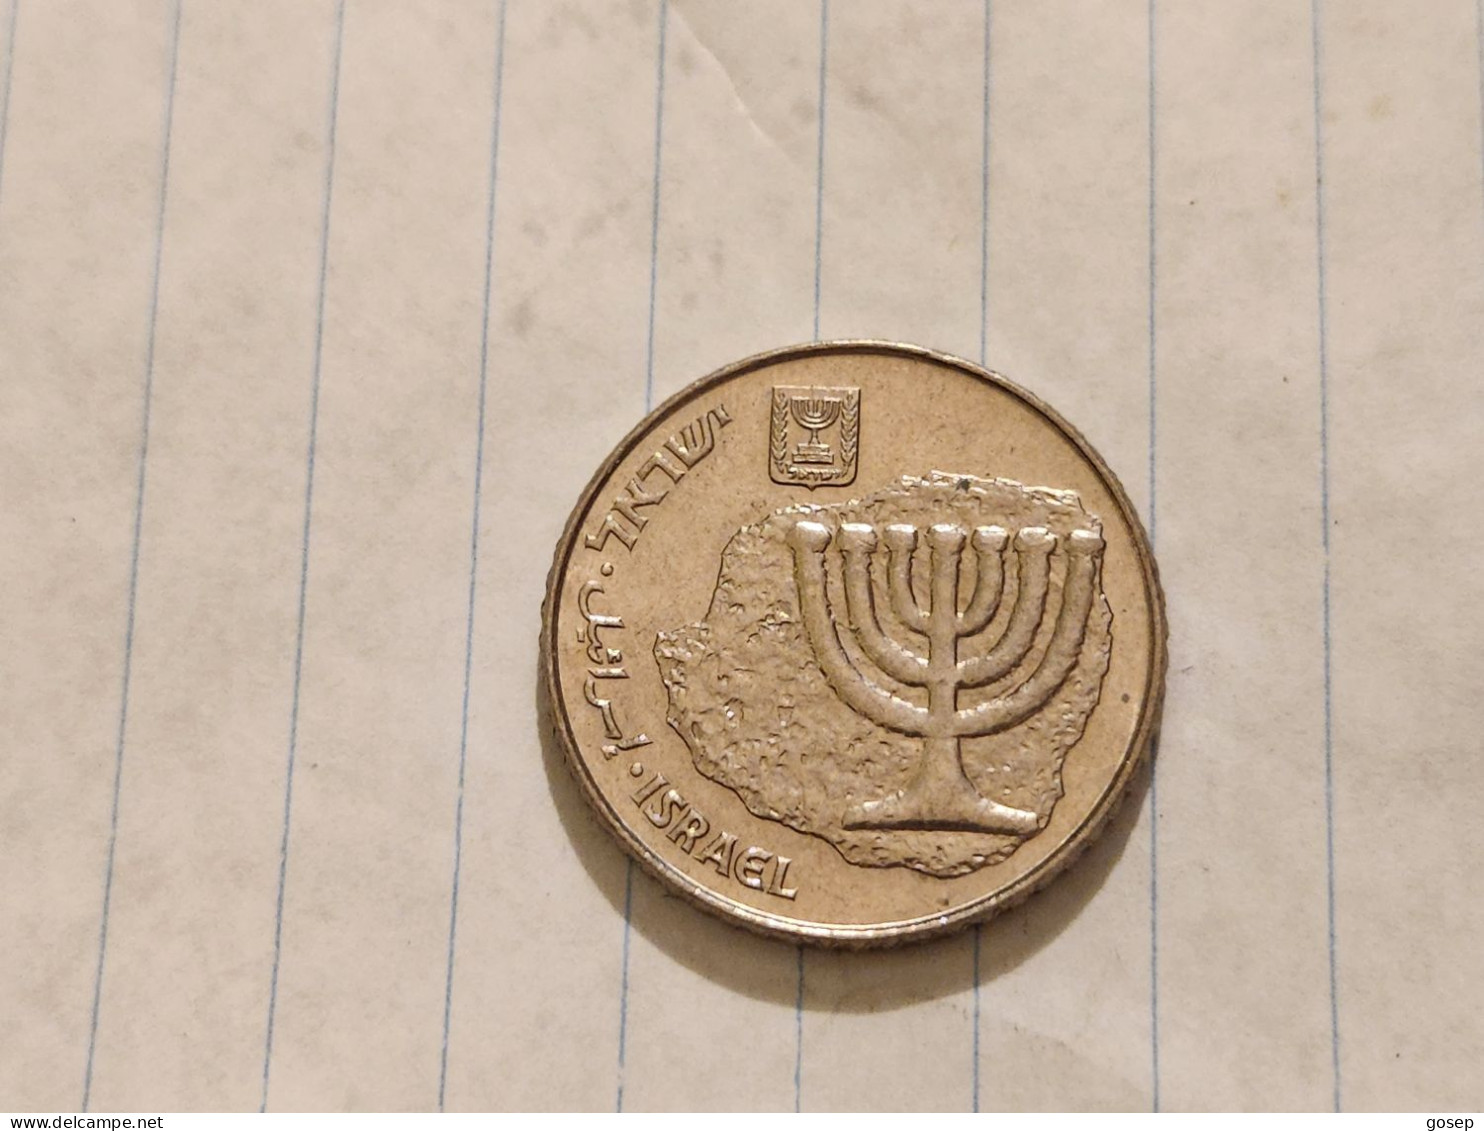 Israel-Coins-SHEKEL(1985-1981)-100 SHEQELIM-Hapanka 37-(HANUKKAH)-(1985)-(32)-תשמ"ה-NIKEL-good - Israel